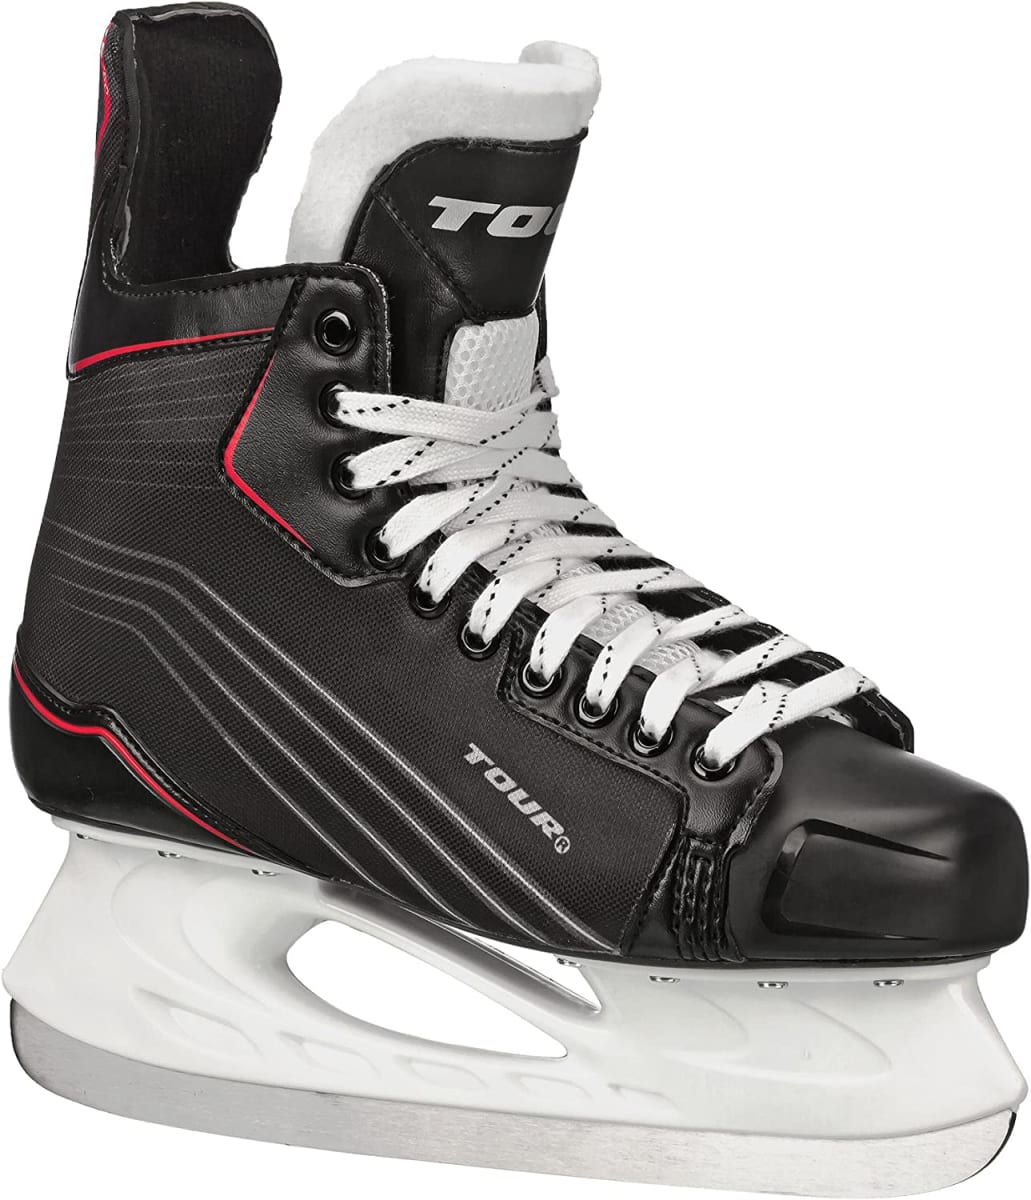 Tour Hockey Tr-750 Ice Hockey Skate